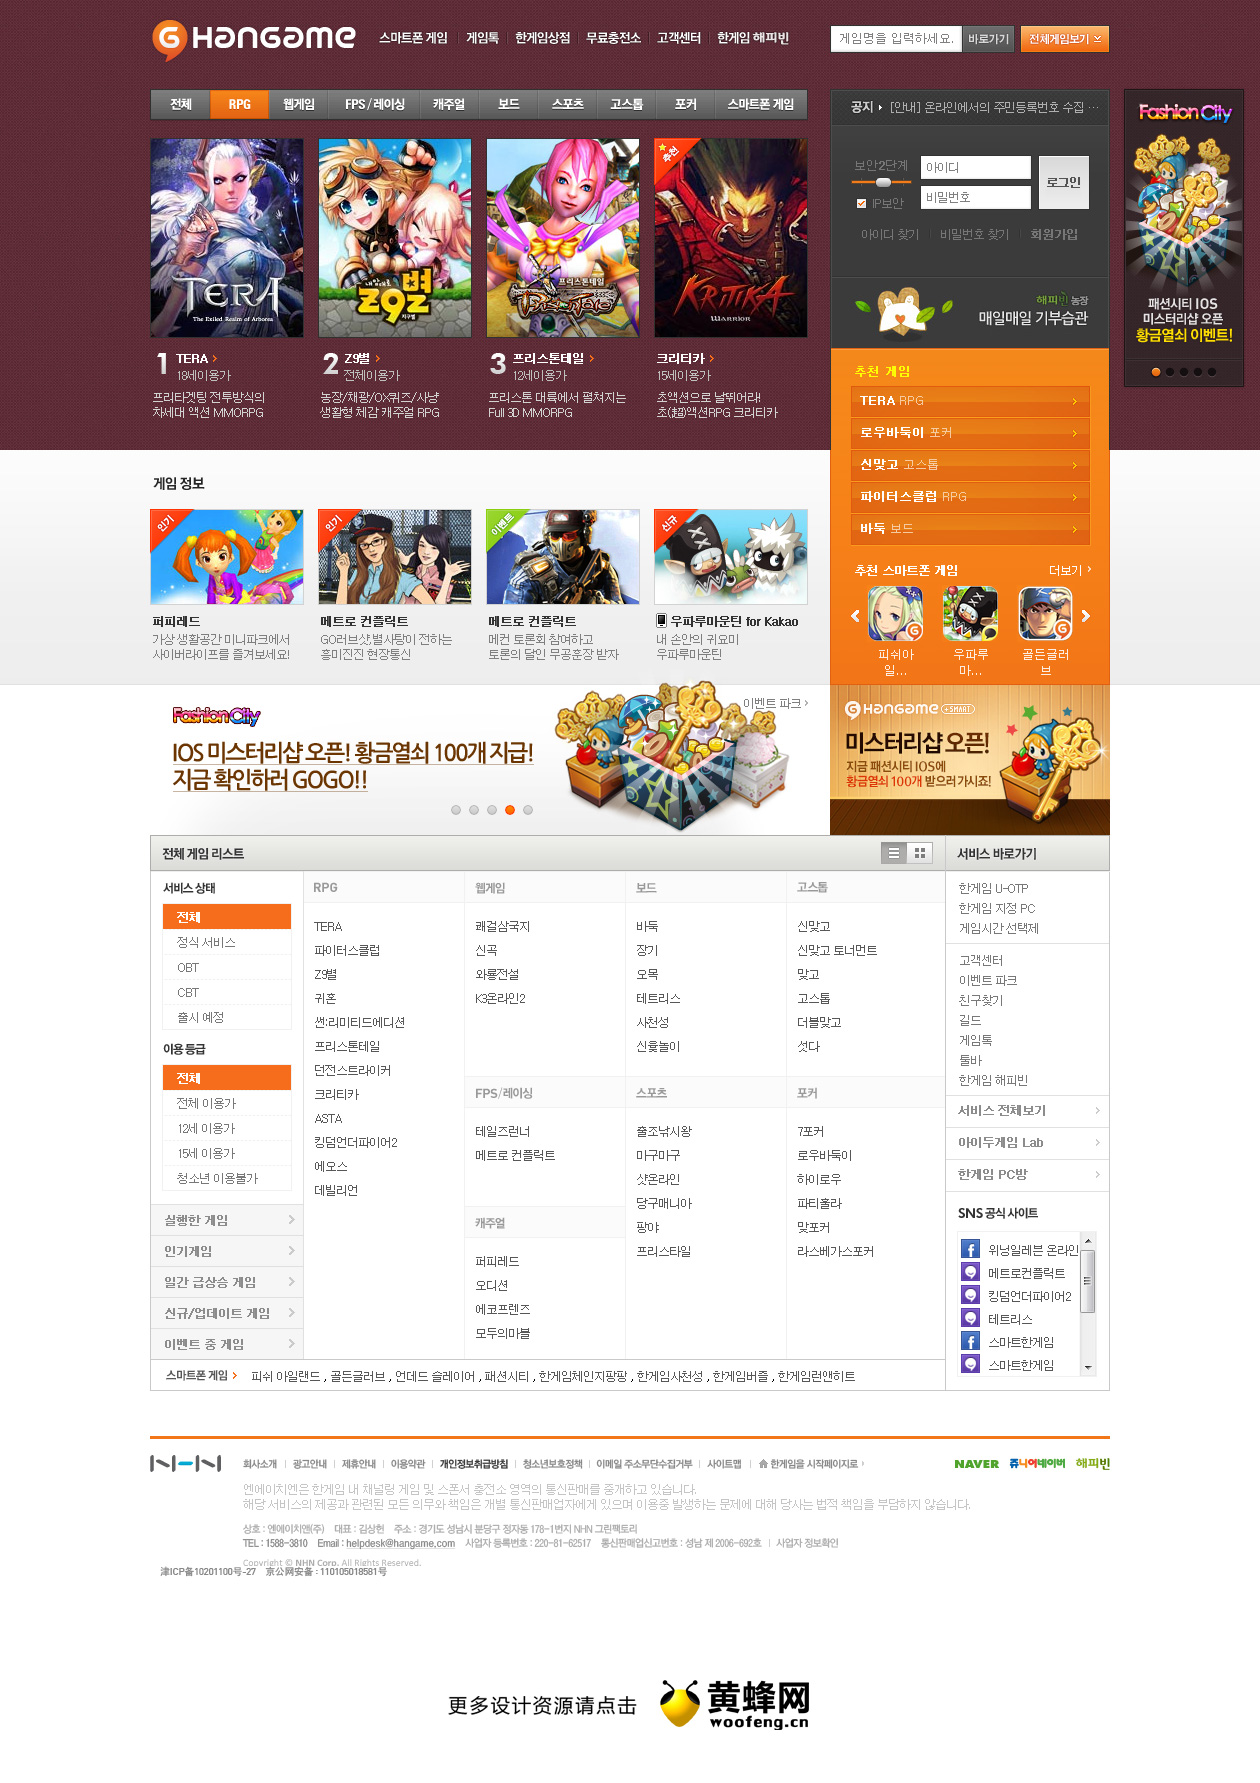 hangame韩国游戏网站，来源自黄蜂网https://woofeng.cn/